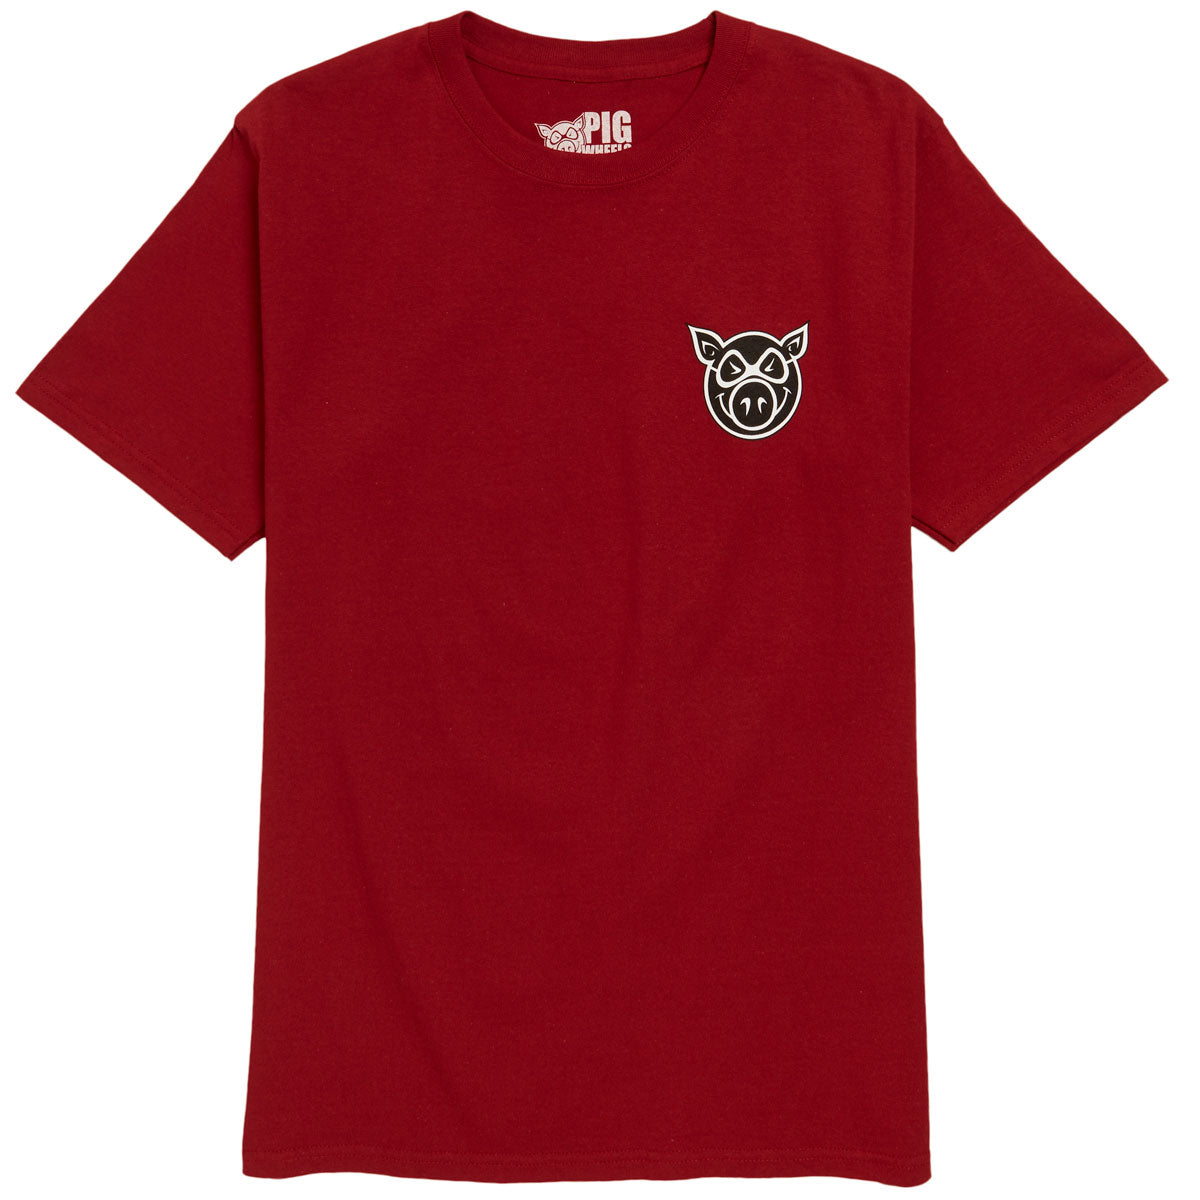 Pig F and B Head T-Shirt - Cardinal image 1